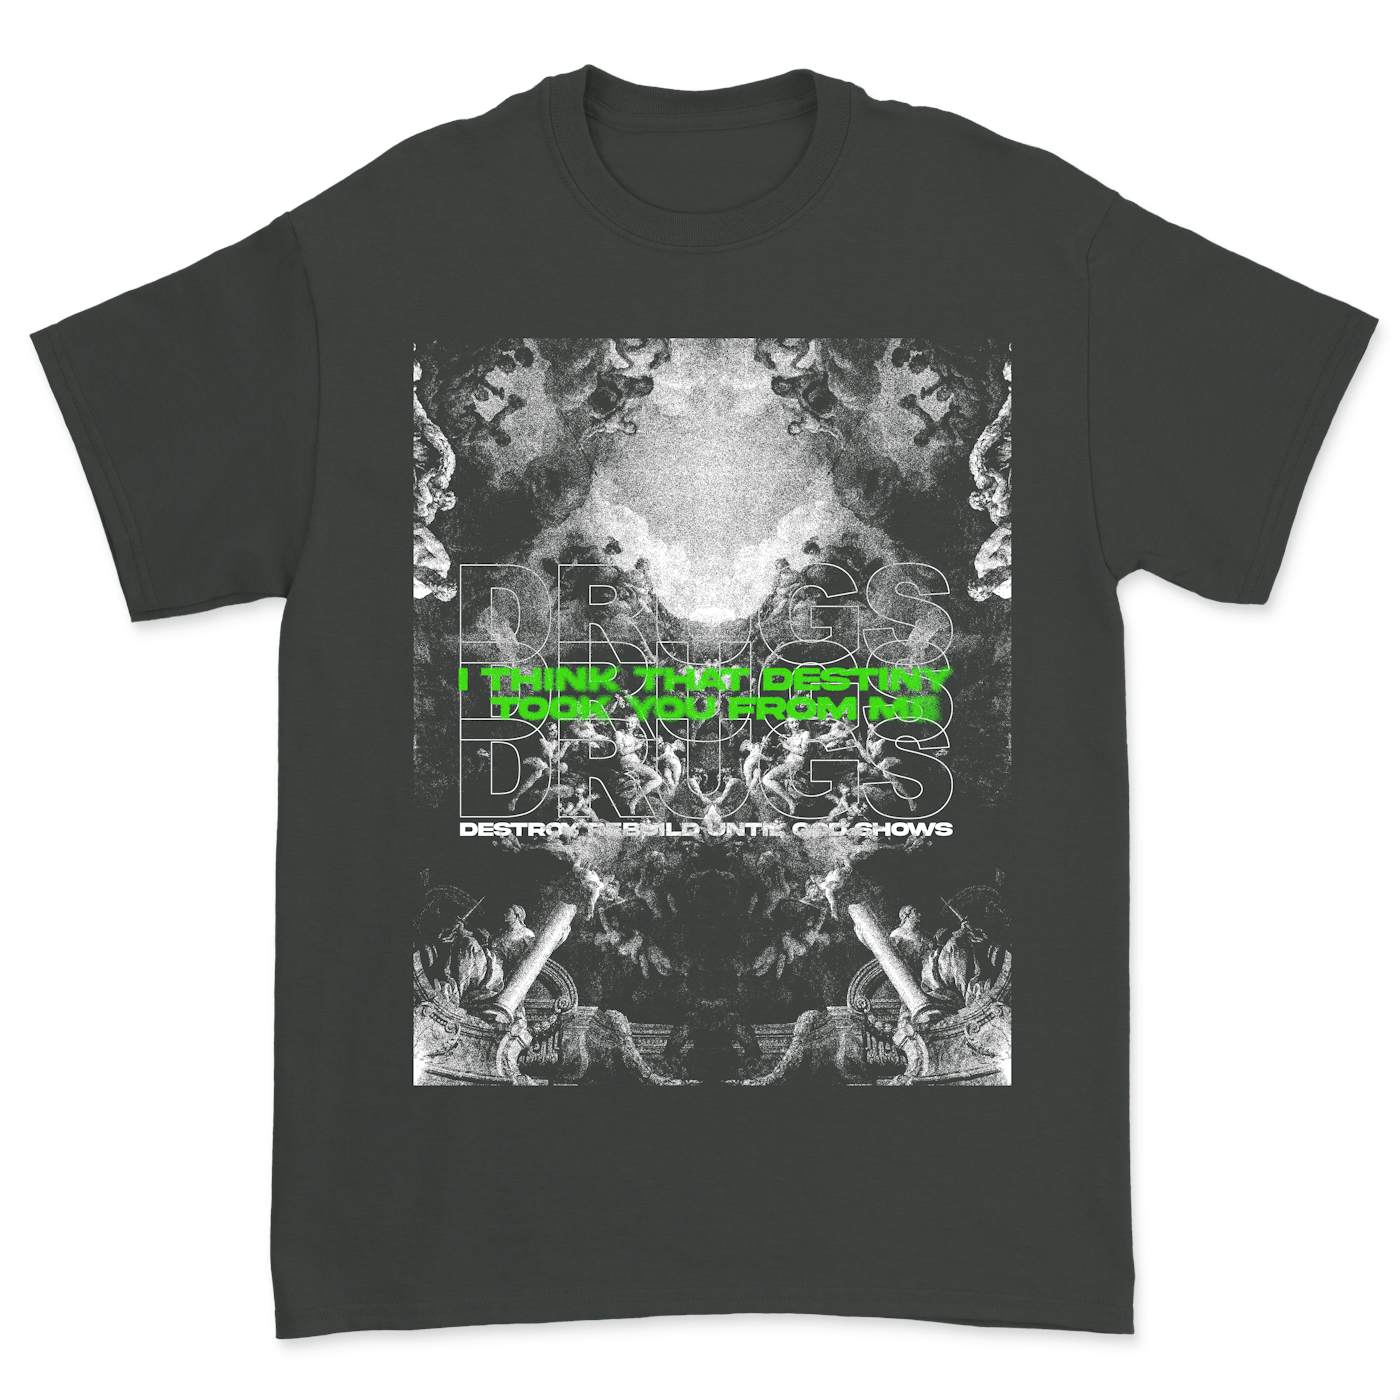 Destroy Rebuild Until God Shows "Destiny" Shirt (Green Print)